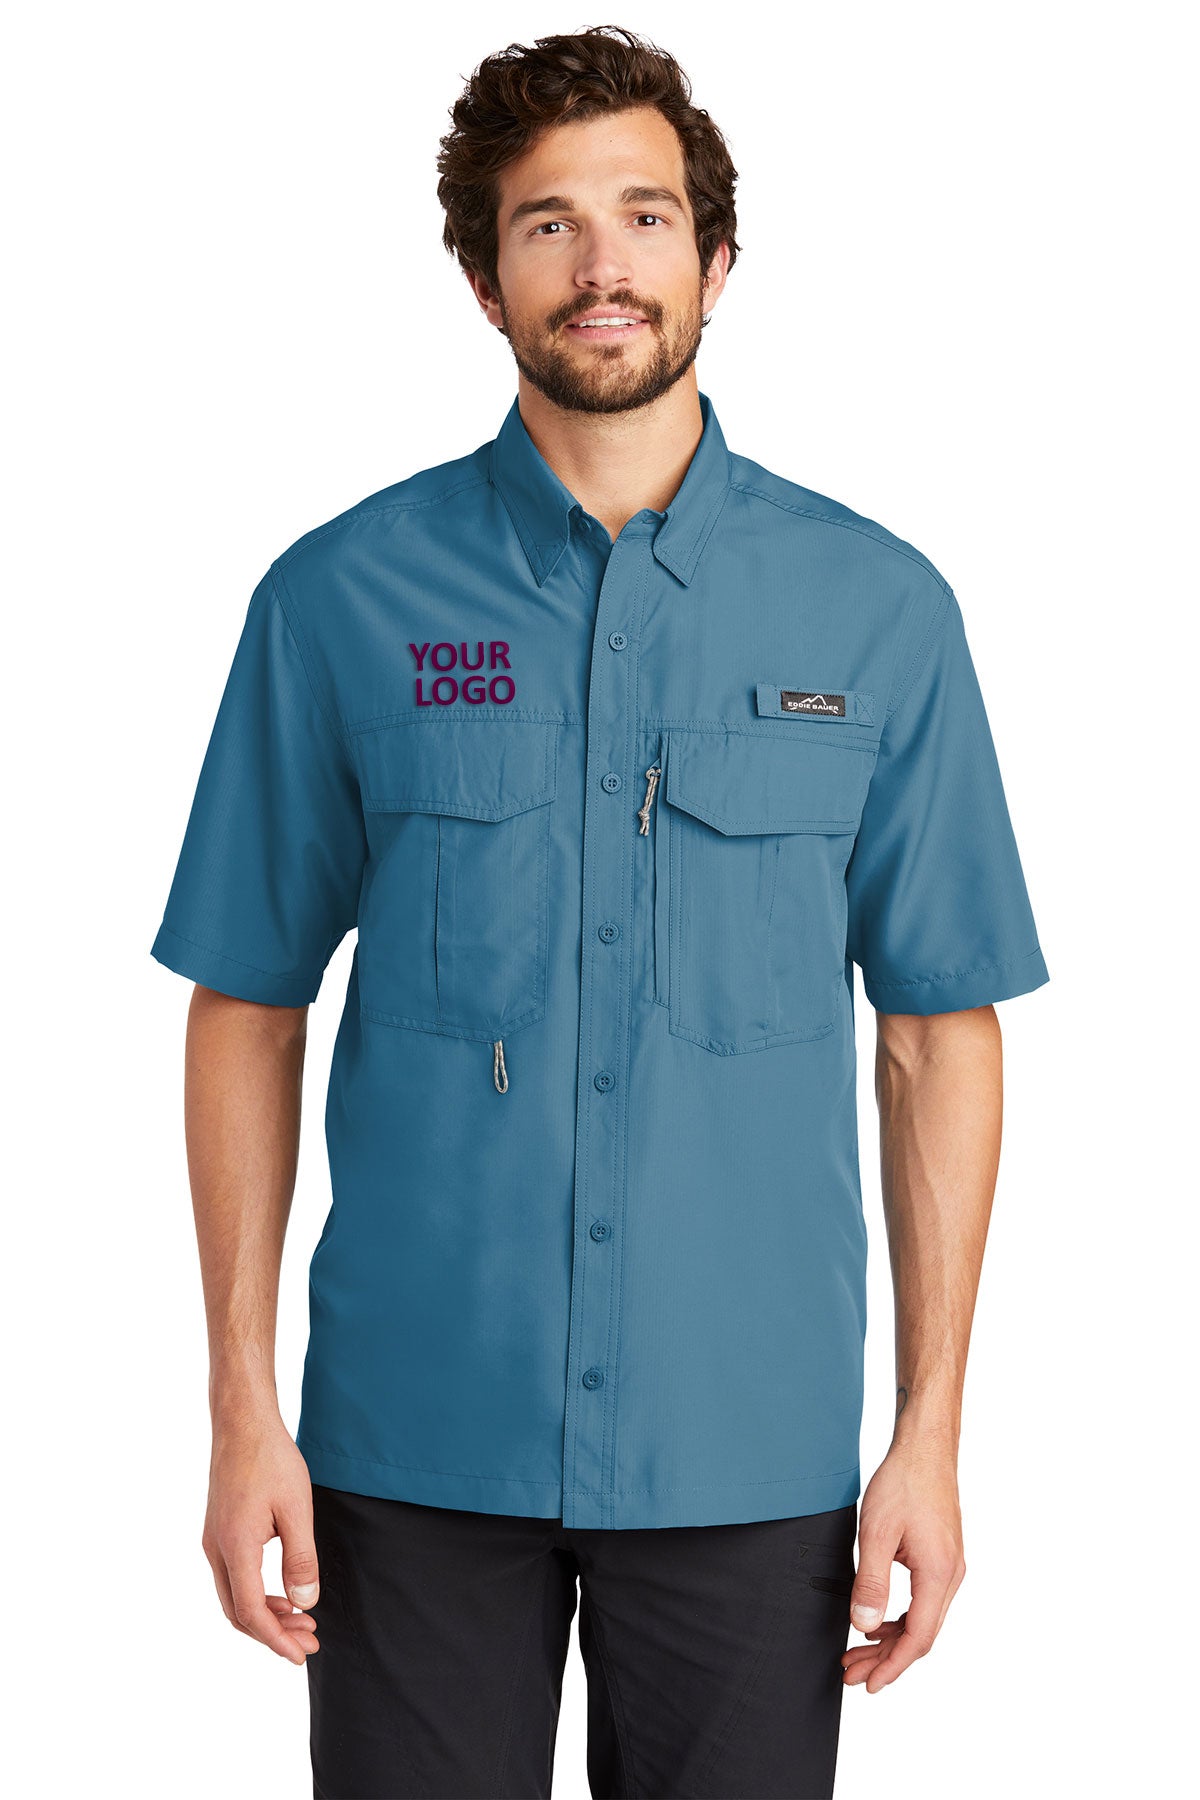 Branded Eddie Bauer Short Sleeve Fishing Shirt Gulf Teal